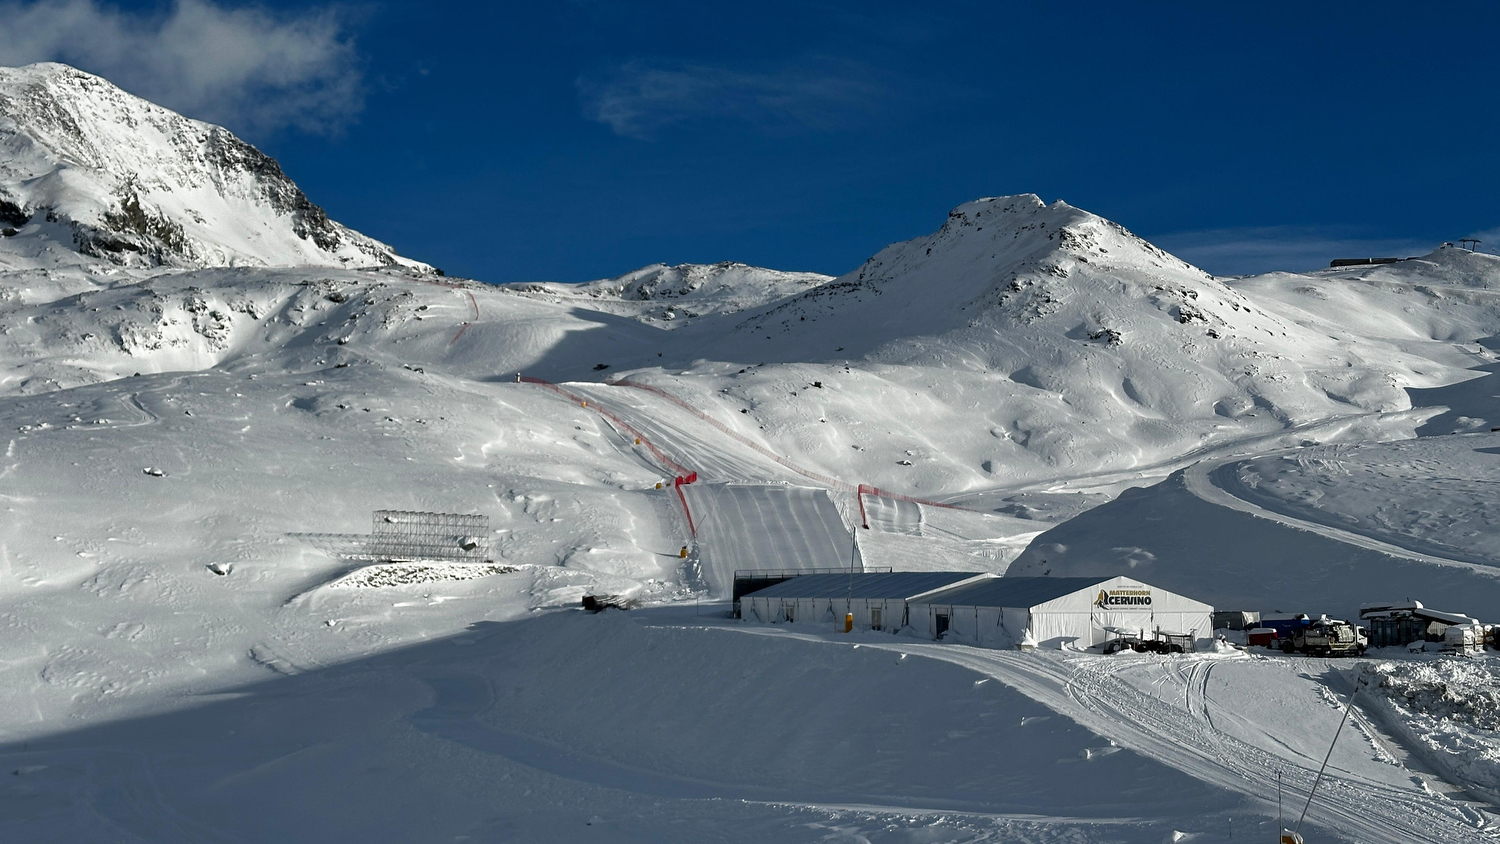 Audi Fis Ski World Cup, Matterhorn Cervino Speed Opening, Breuil-Cervinia (AO), condizioni di innevamento eccezionali a Cime Bianche Laghi. Photo credit: MCSO Organizing committee